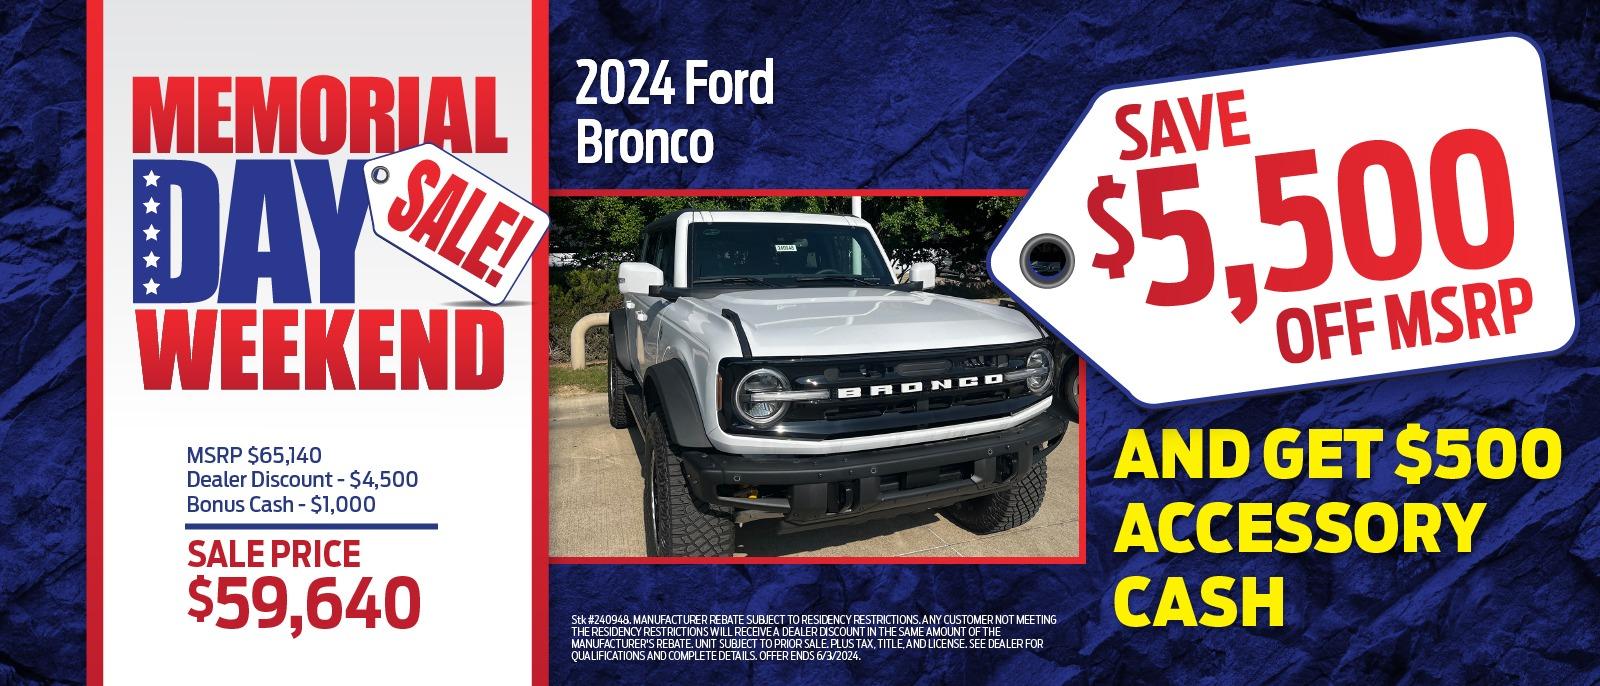 2024 Ford Bronco
Save $4,500 Off MSRP